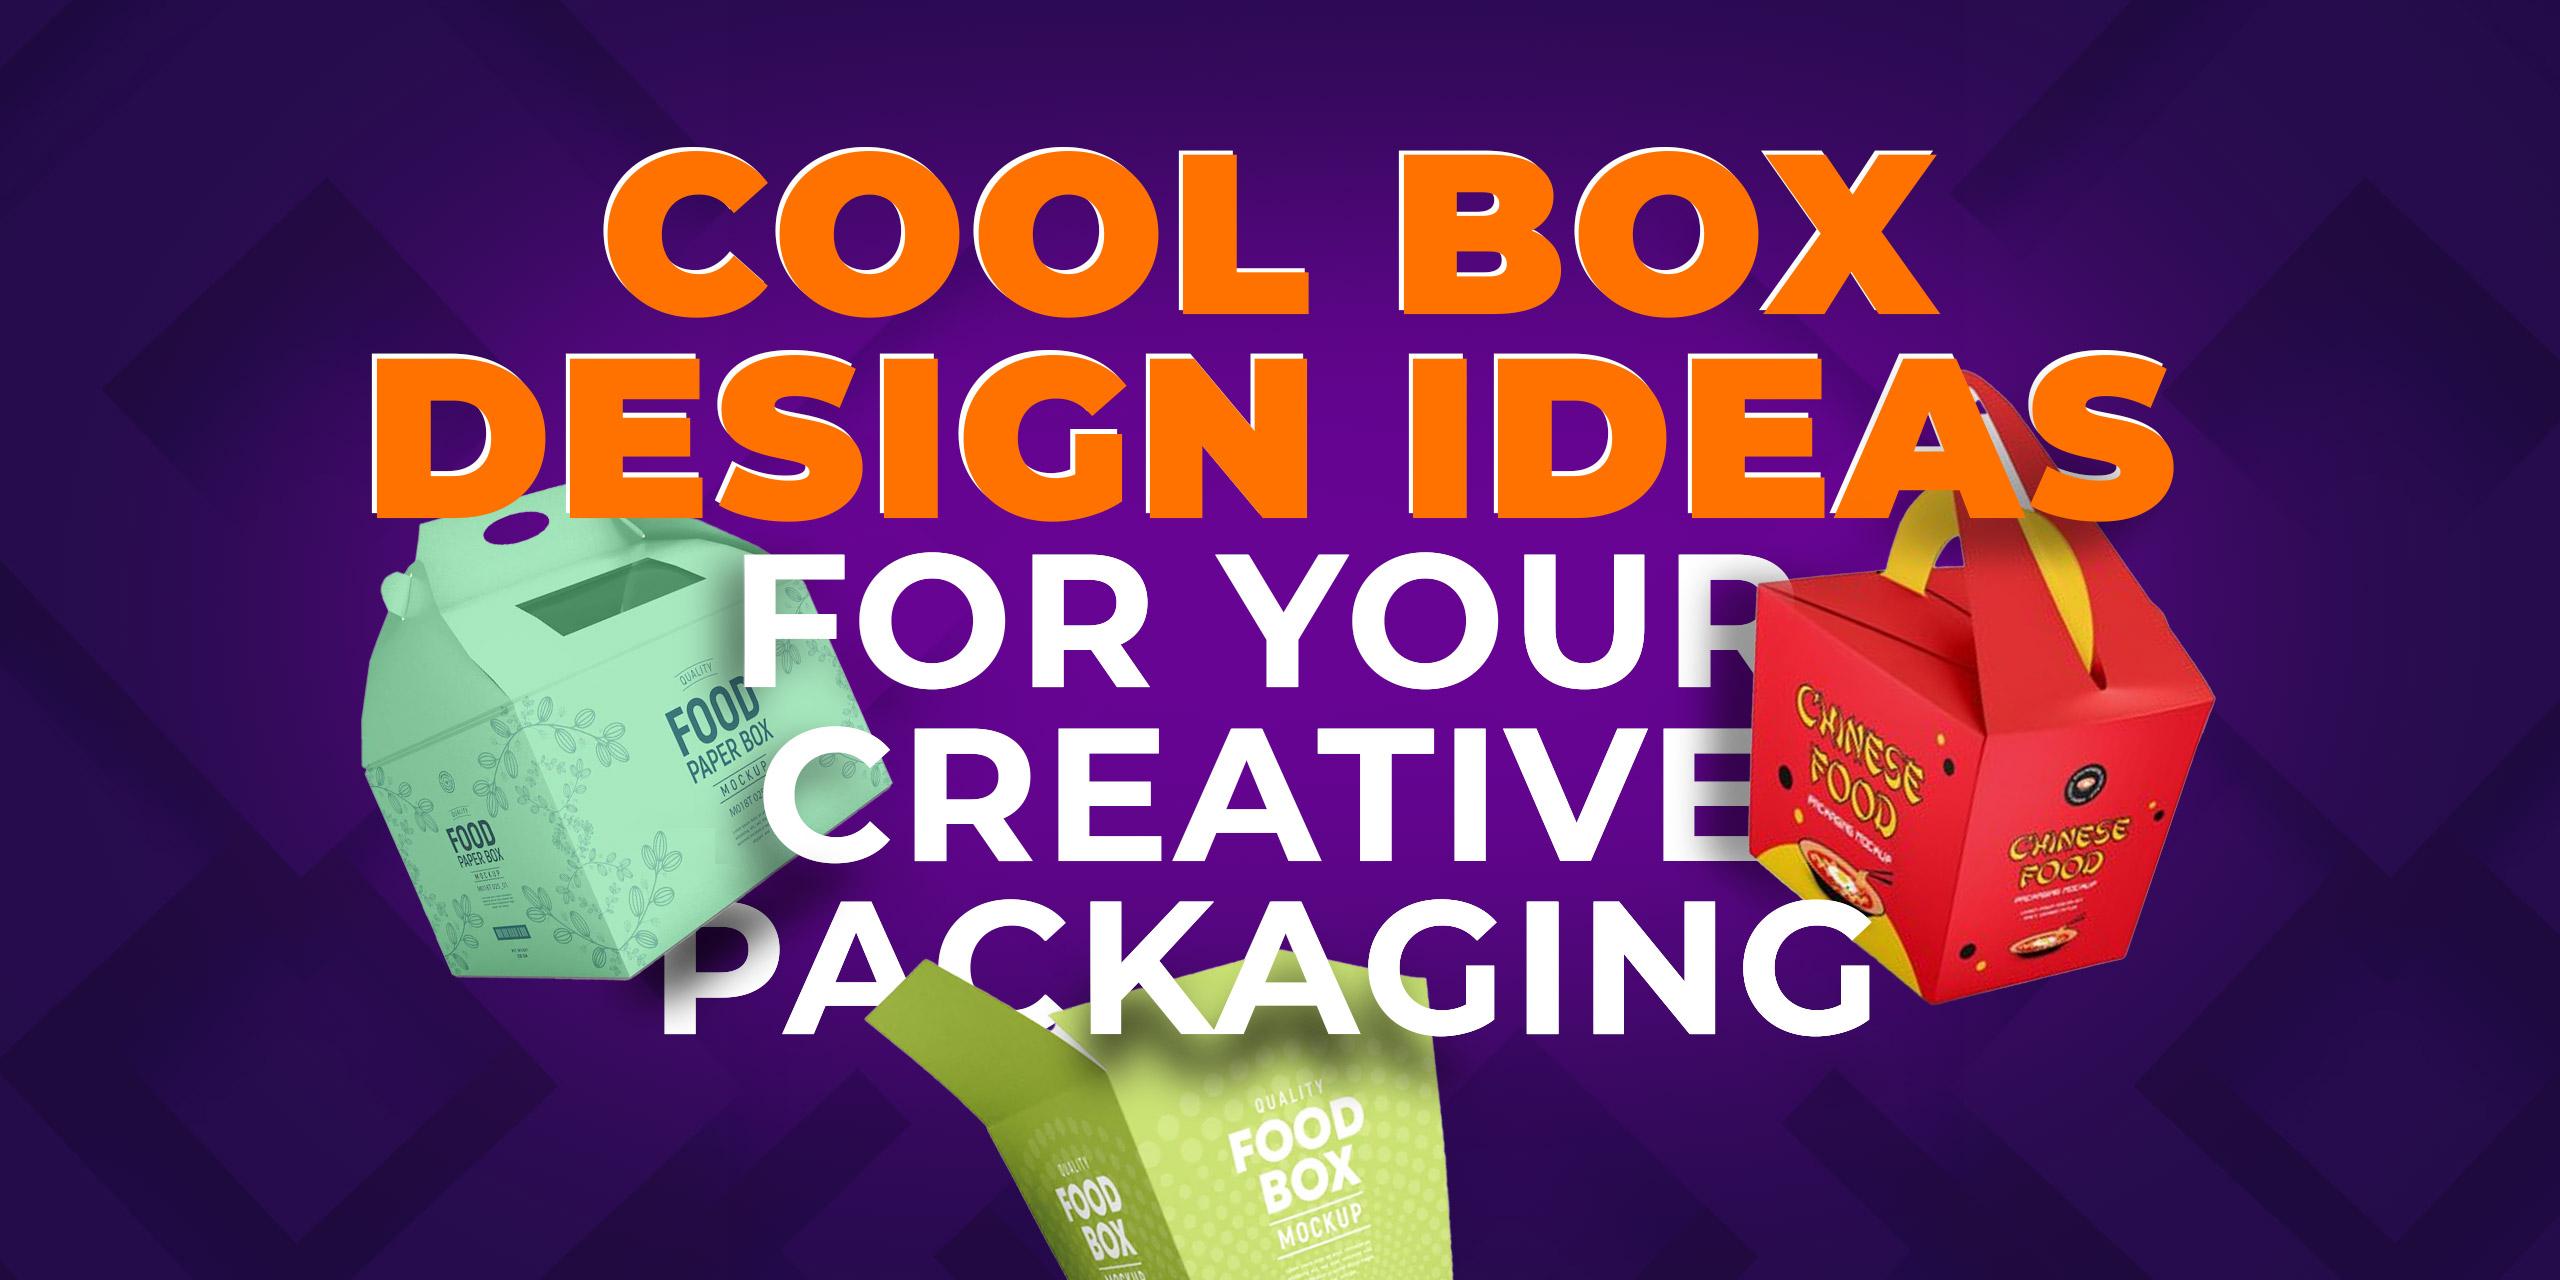 Cool box design ideas